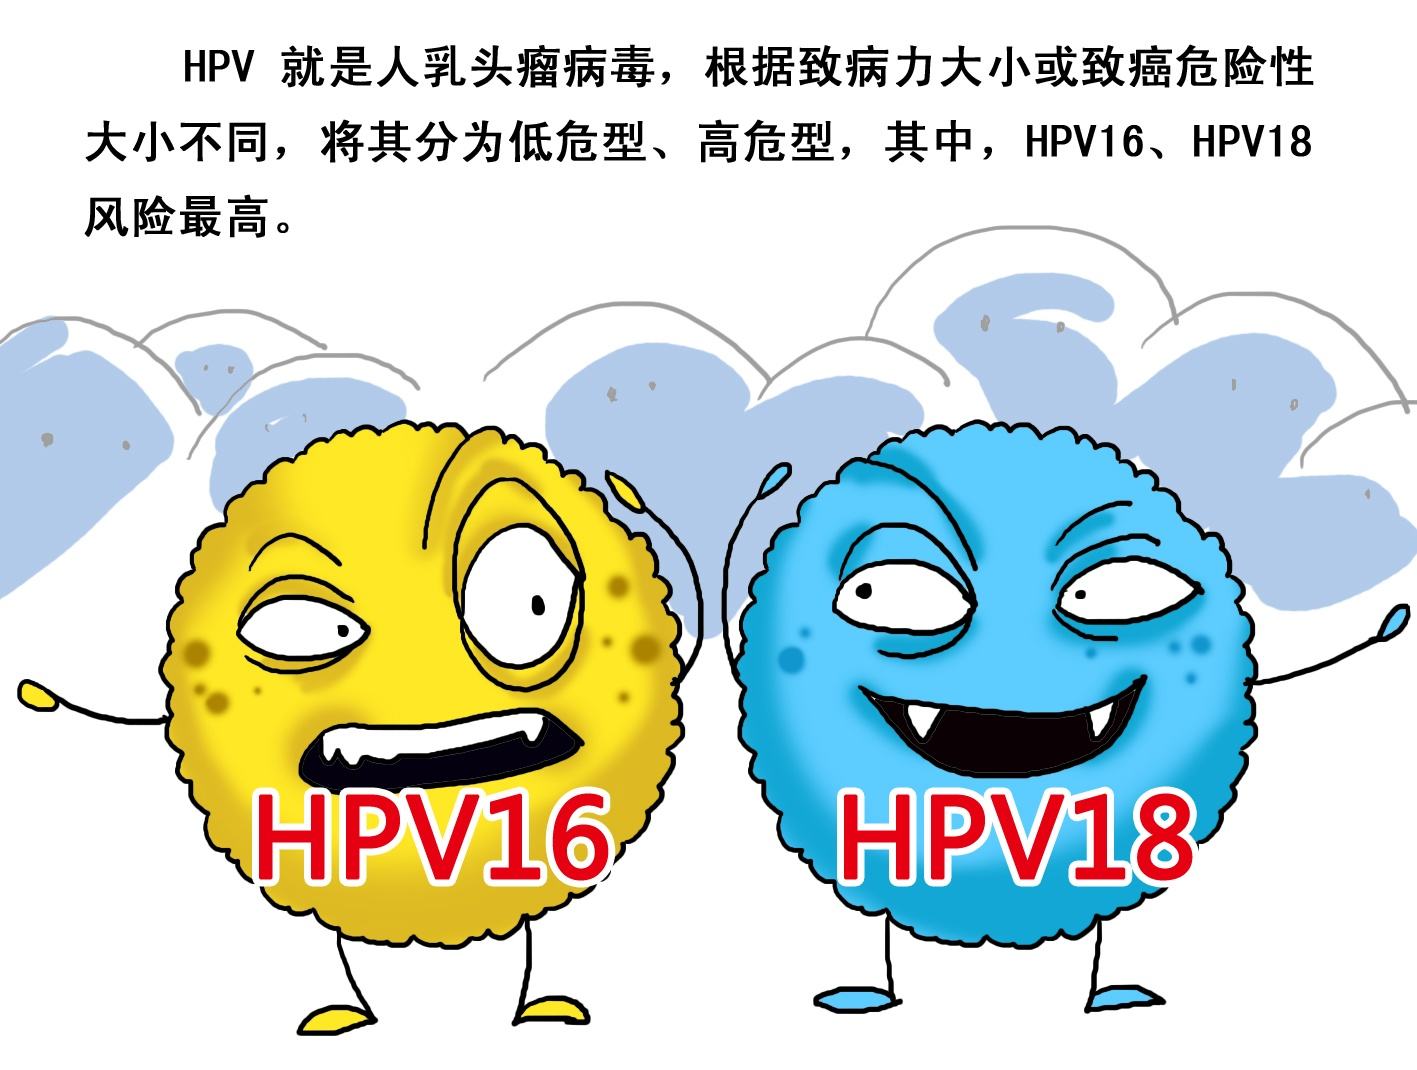 HPV常见的几种传播途径你都知道吗？ - 知乎